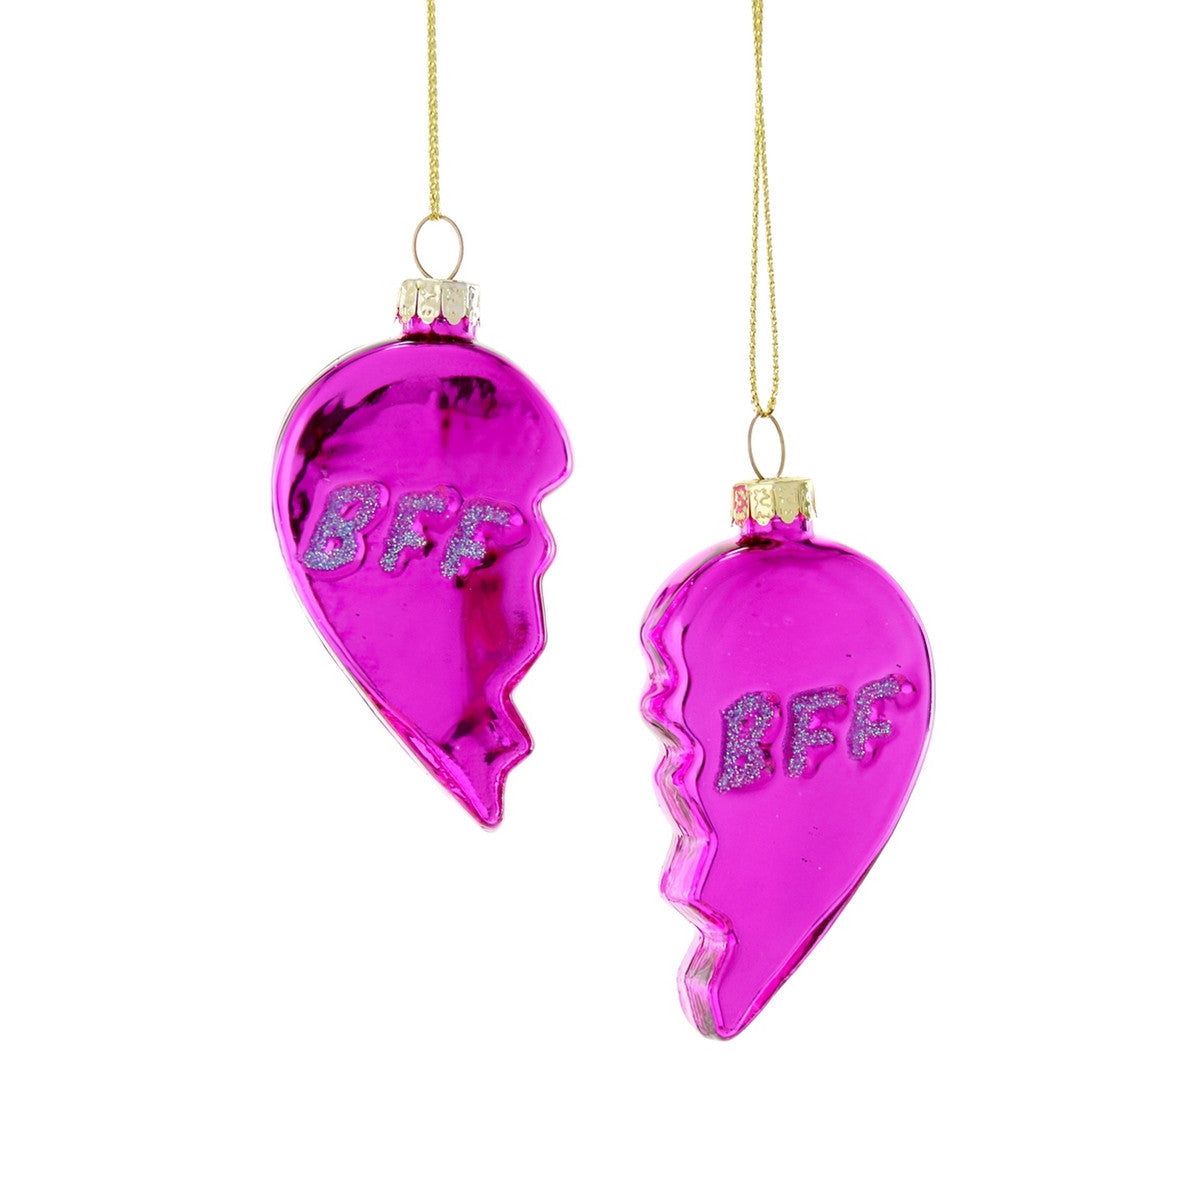 BFF Heart Ornament